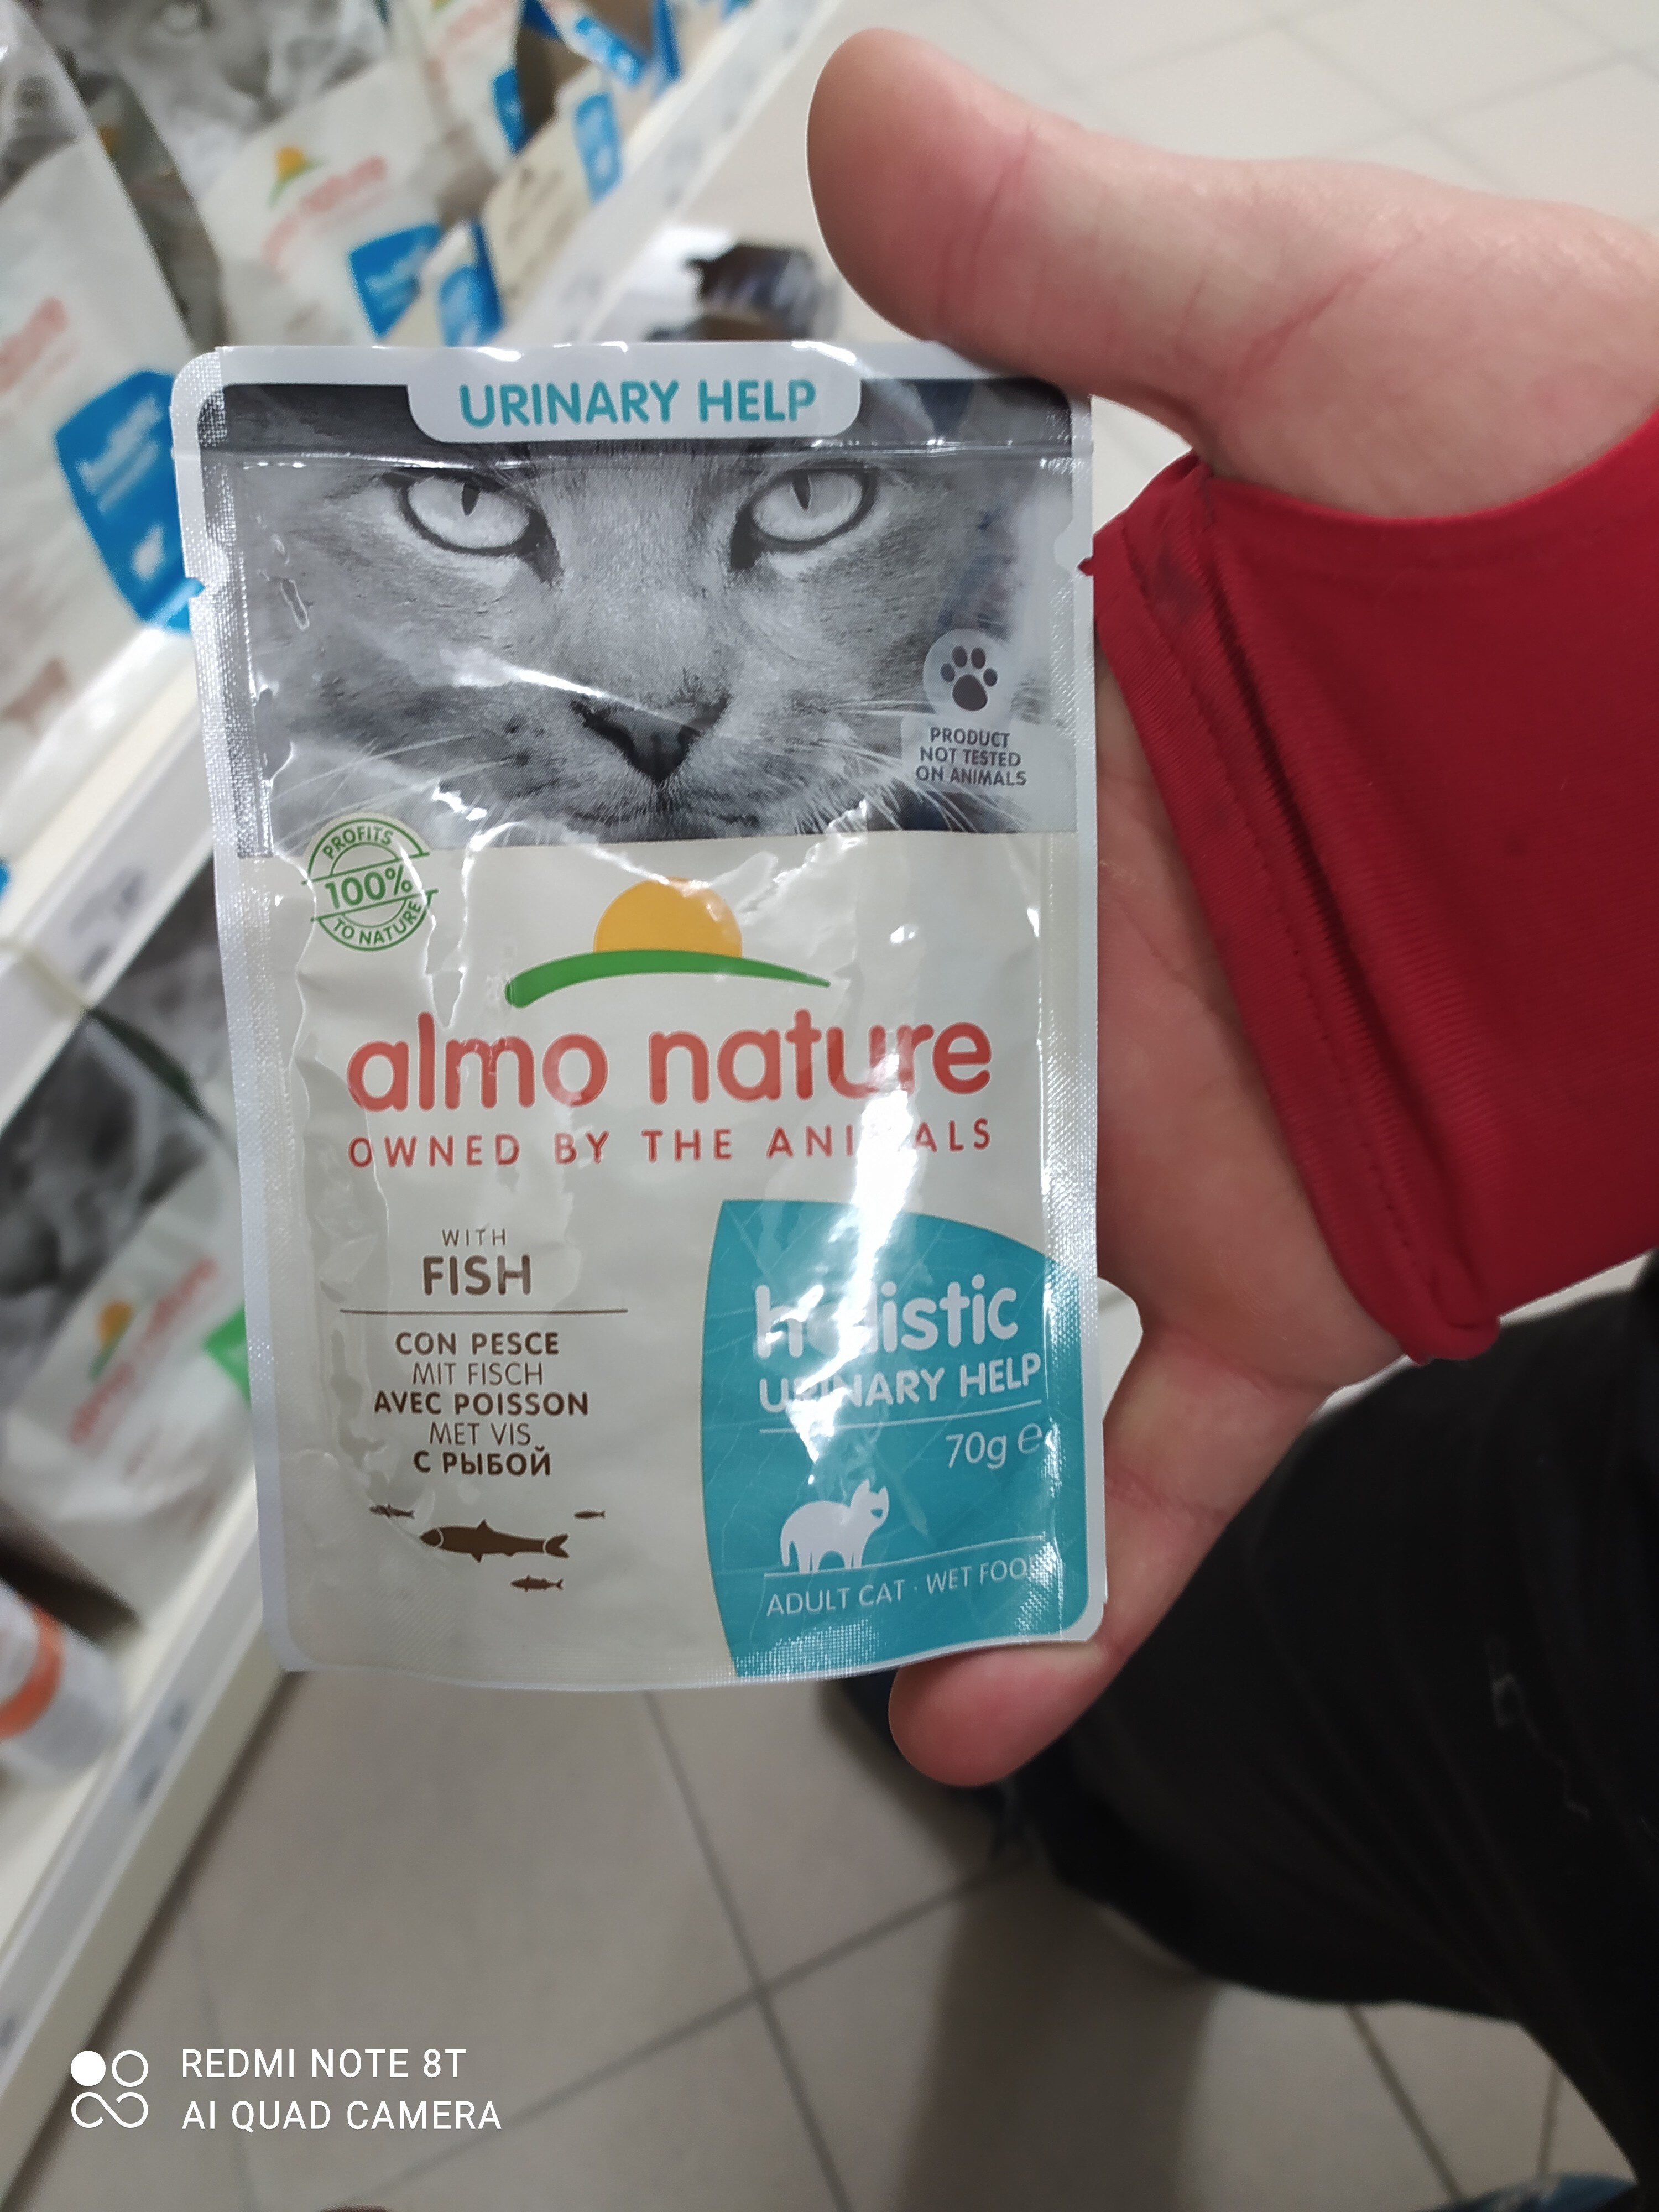 almo nature pesce holistic urinary help - Product - it